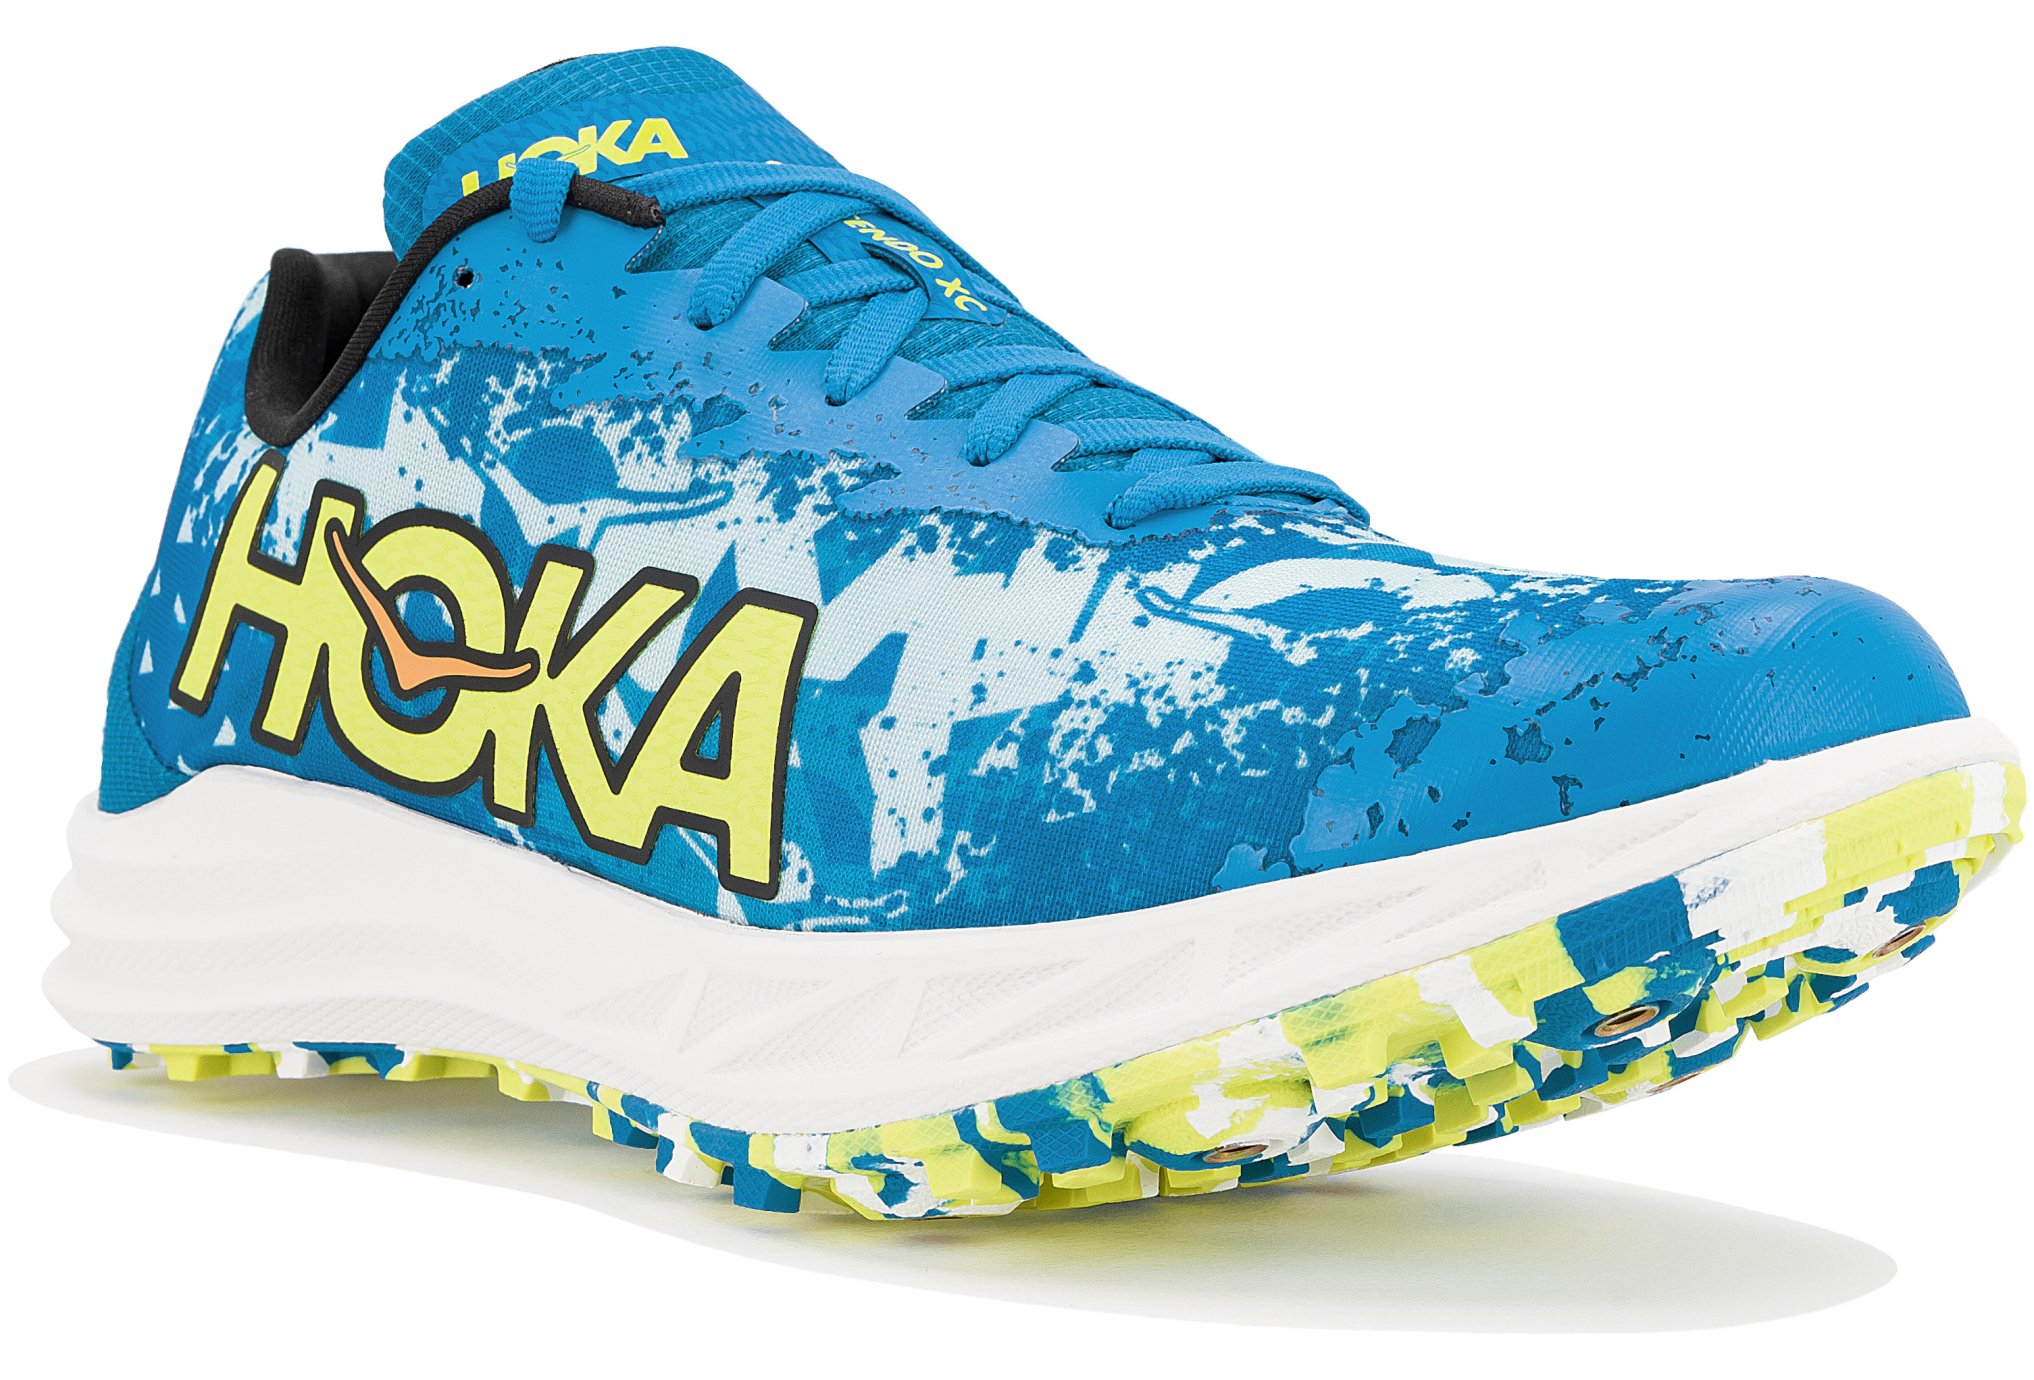 Quelle chaussure de running Hoka choisir ?